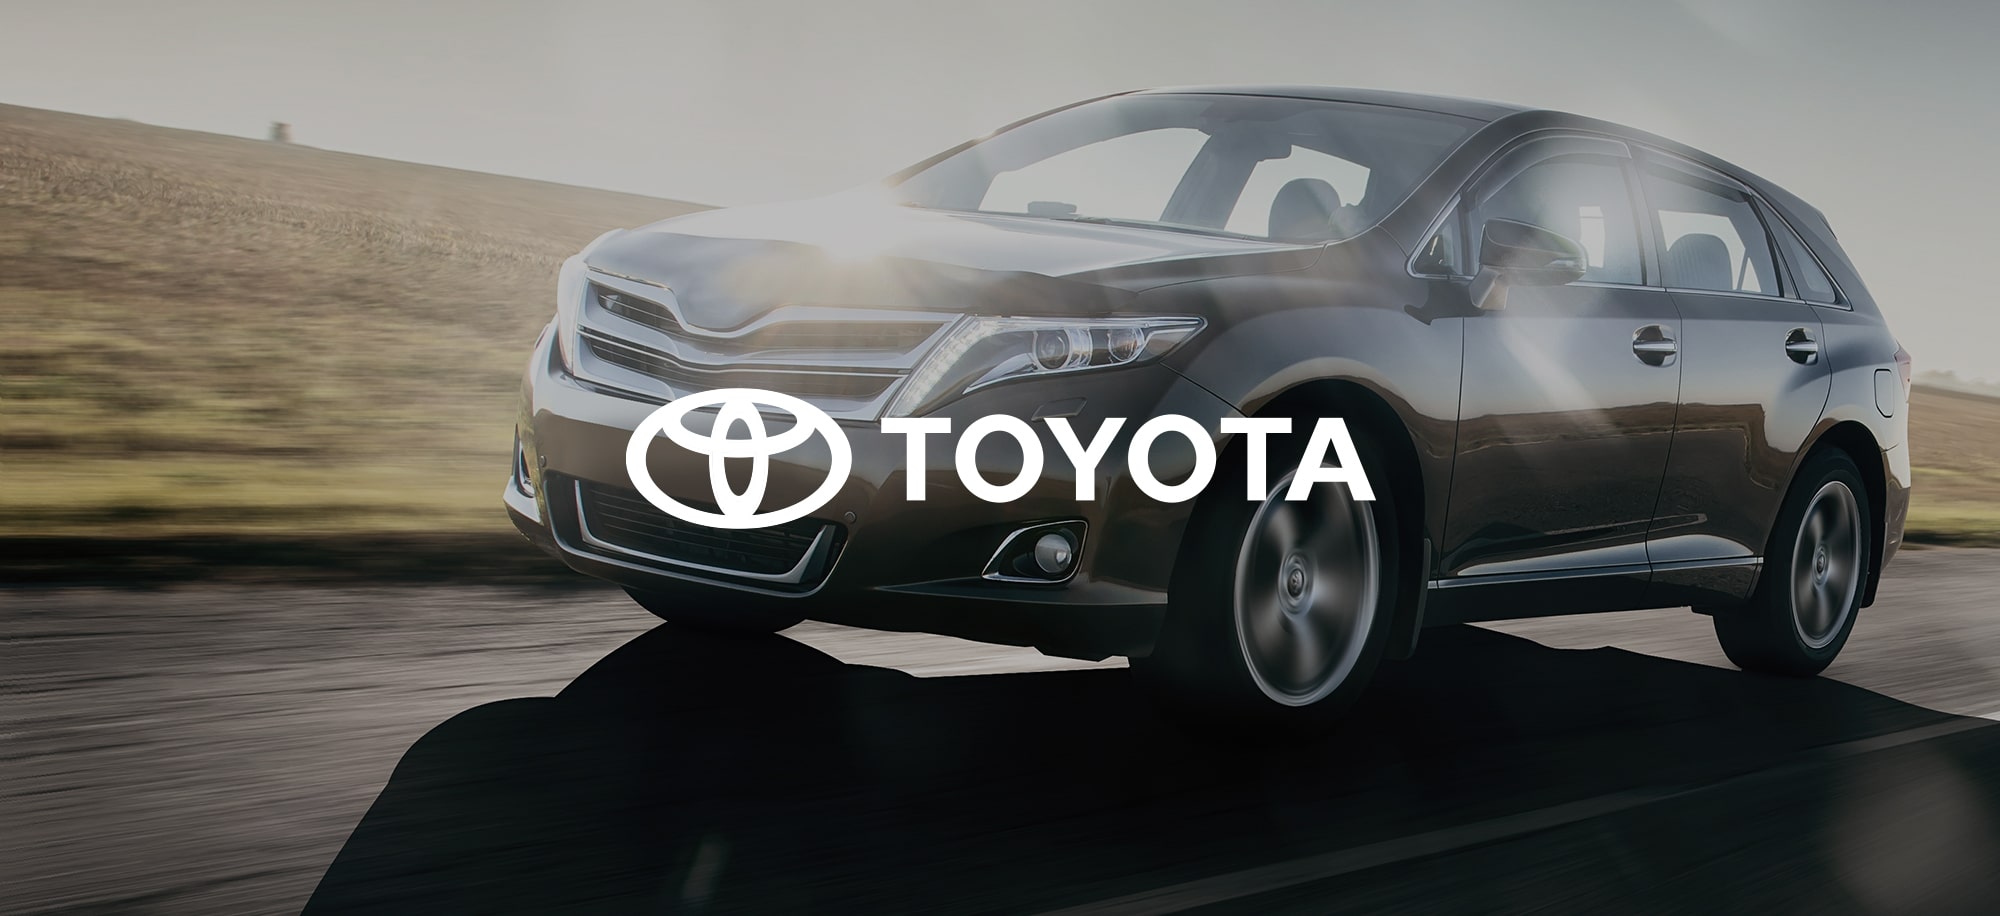 Toyota’s insights platform creates opportunity